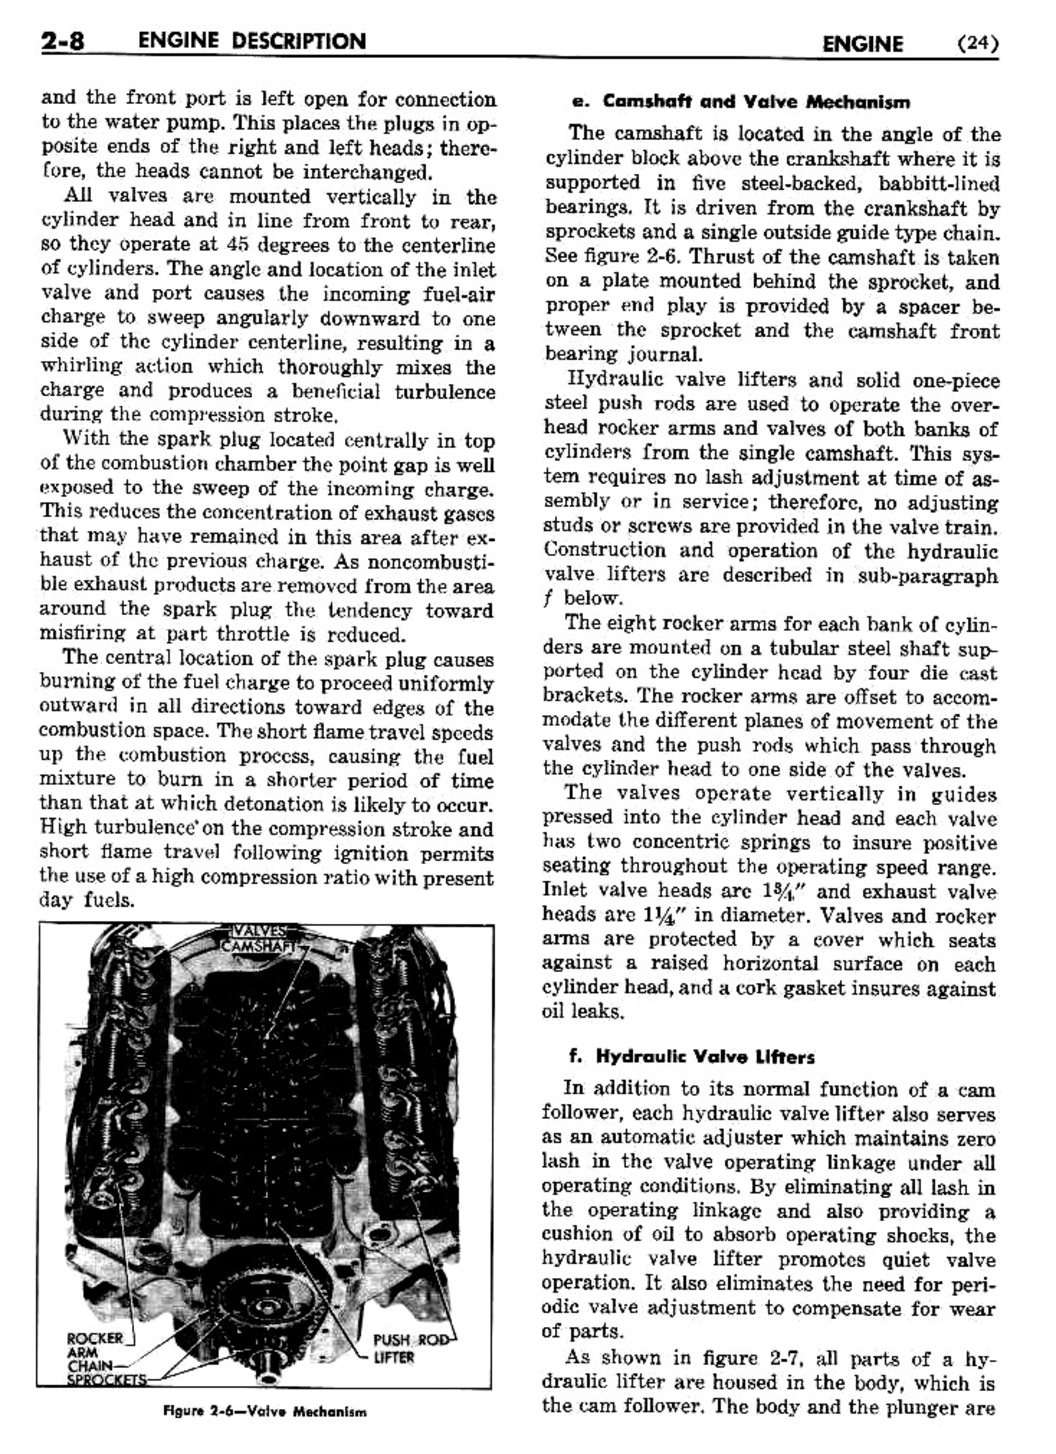 n_03 1954 Buick Shop Manual - Engine-008-008.jpg